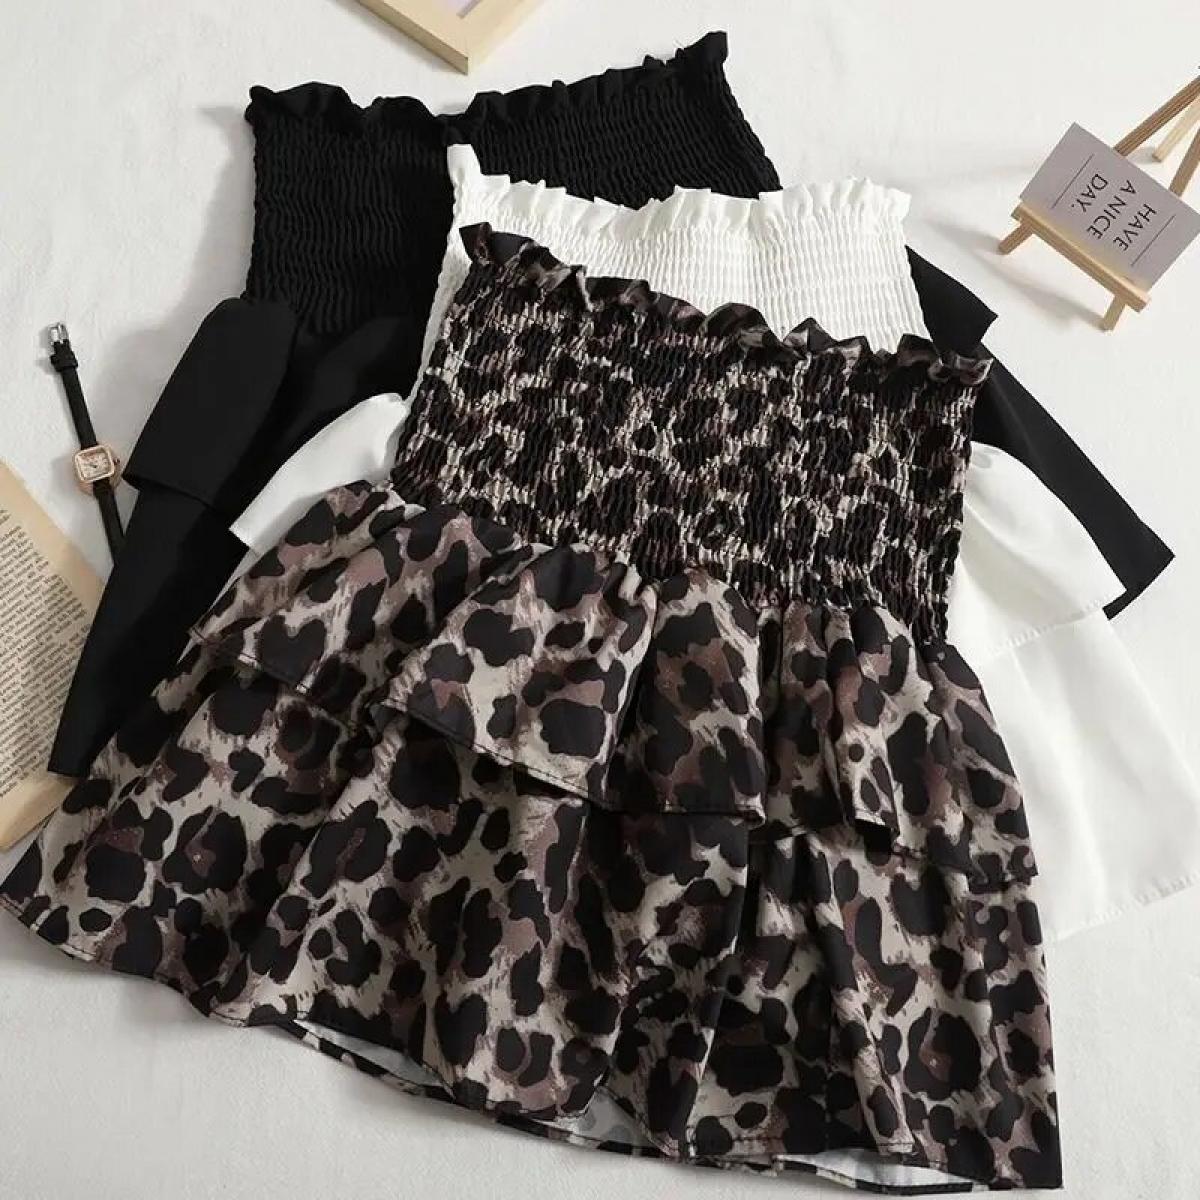 Cake Leopard  Mini Skirts Women High Waist Streetwear Chic Designed Popular Ins Hot Leisure Party Club Wear Faldas White